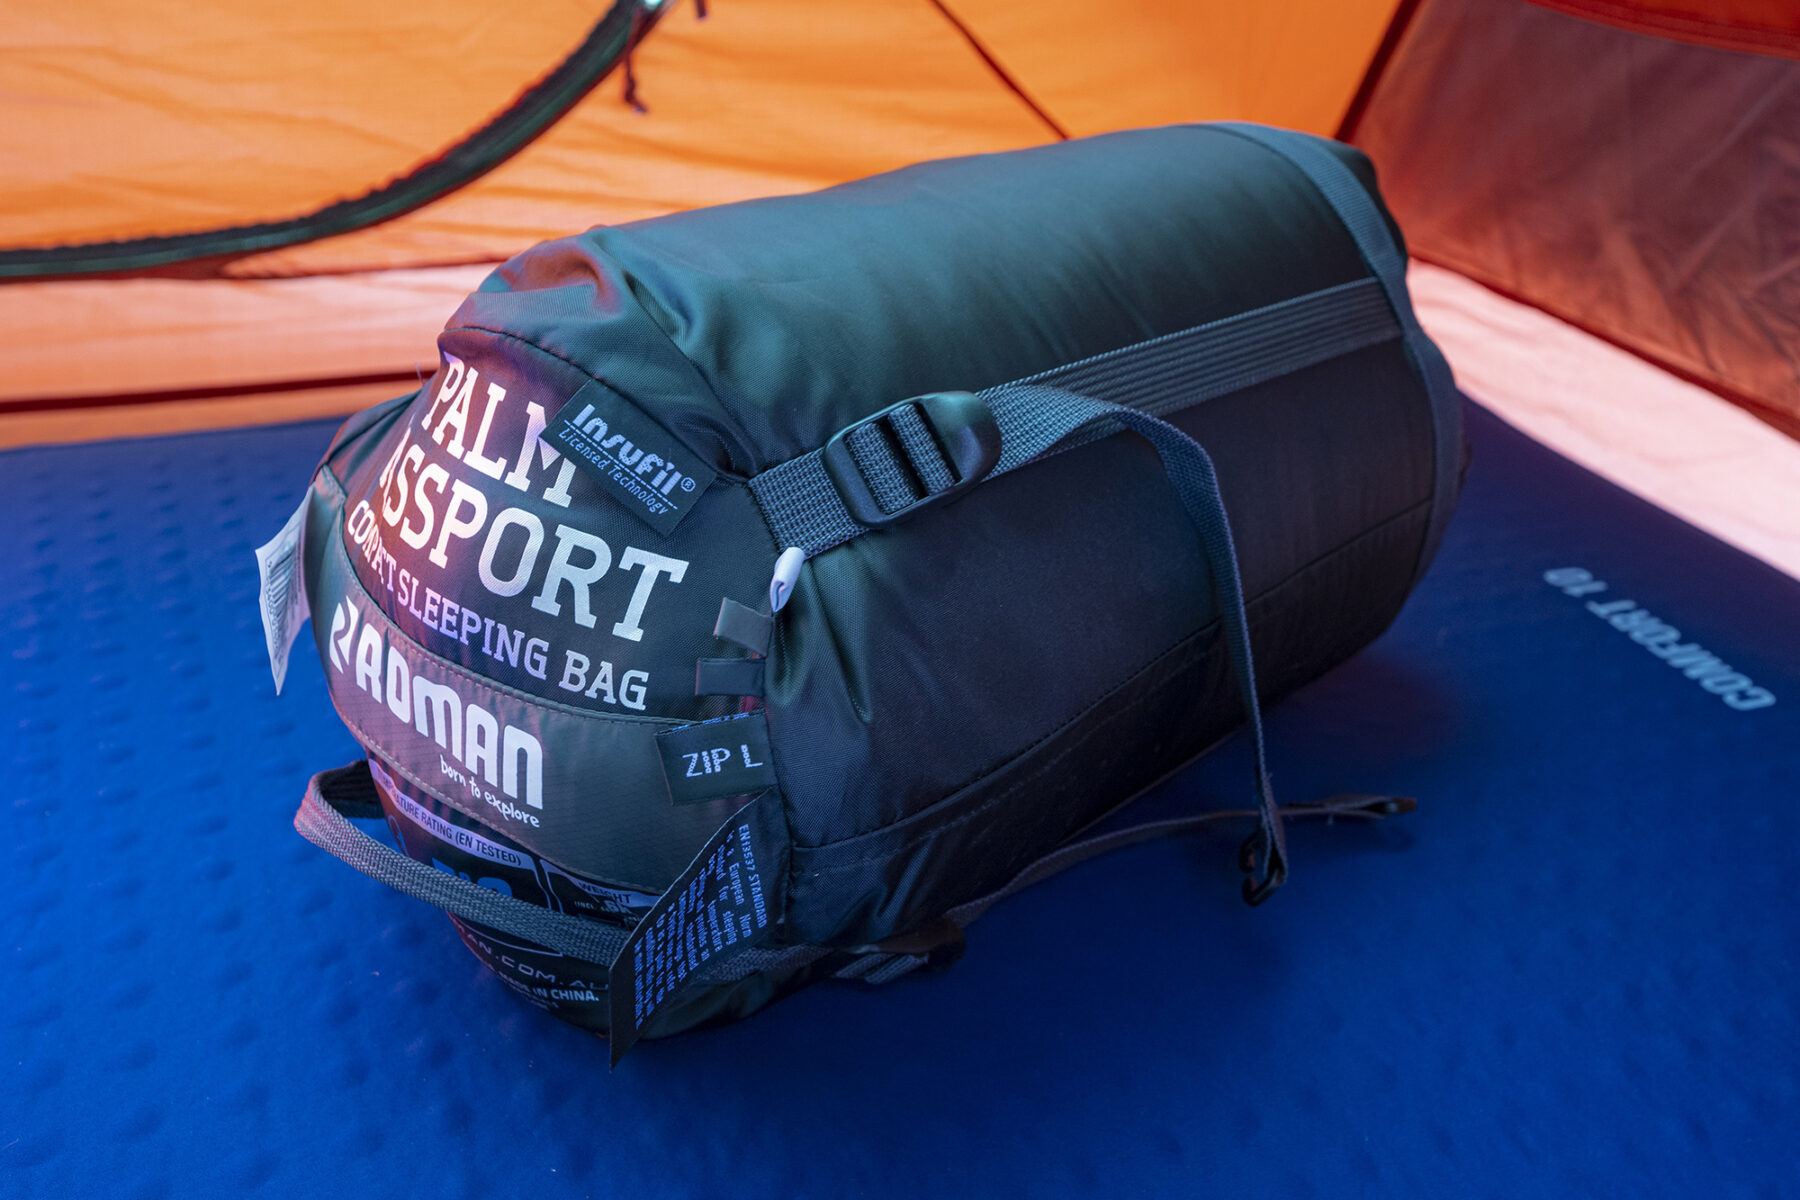 Roman Palm Passport sleeping bag: Tested